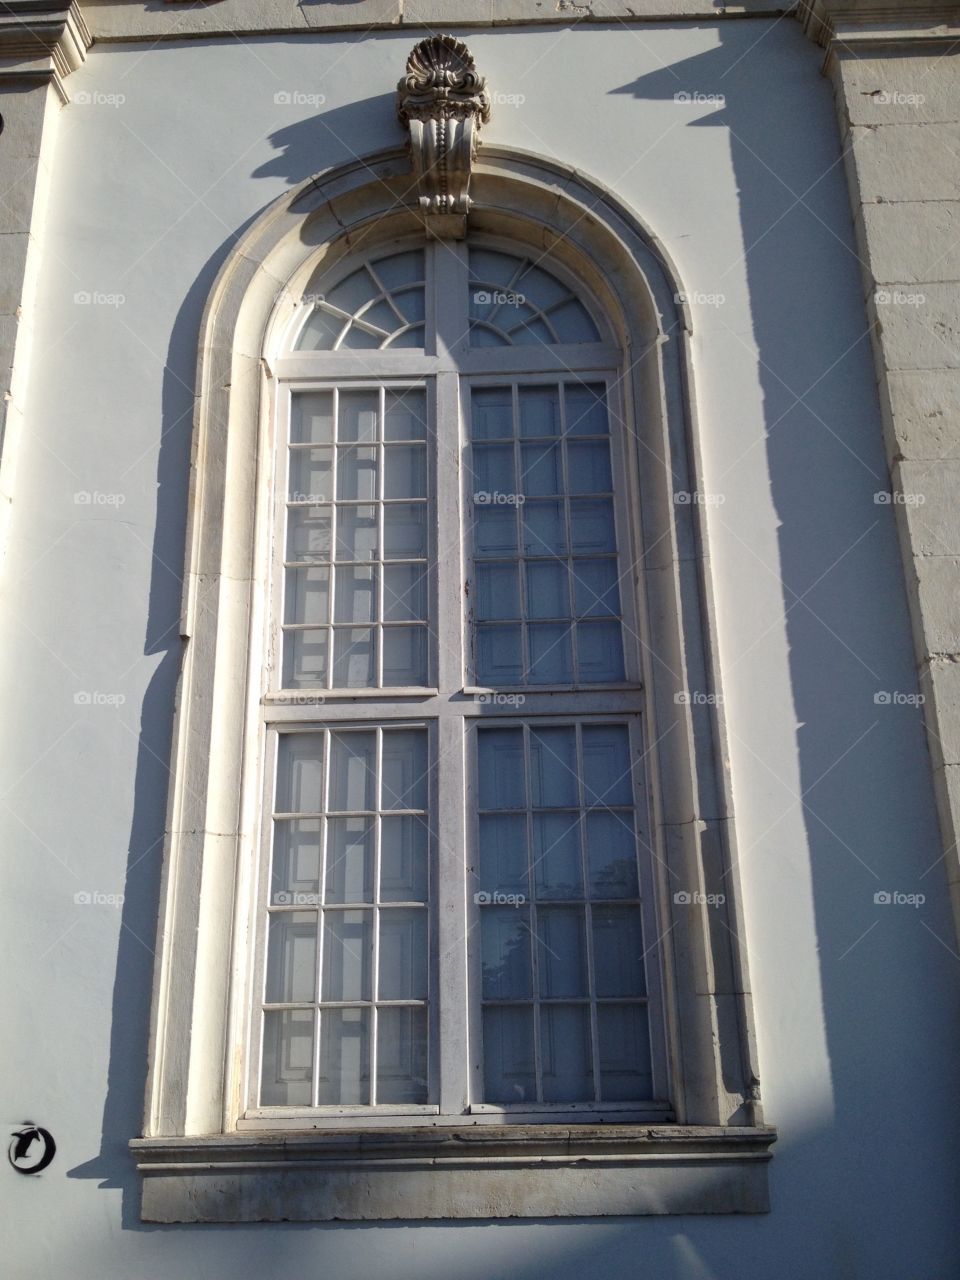 Big window of old building (18th century)